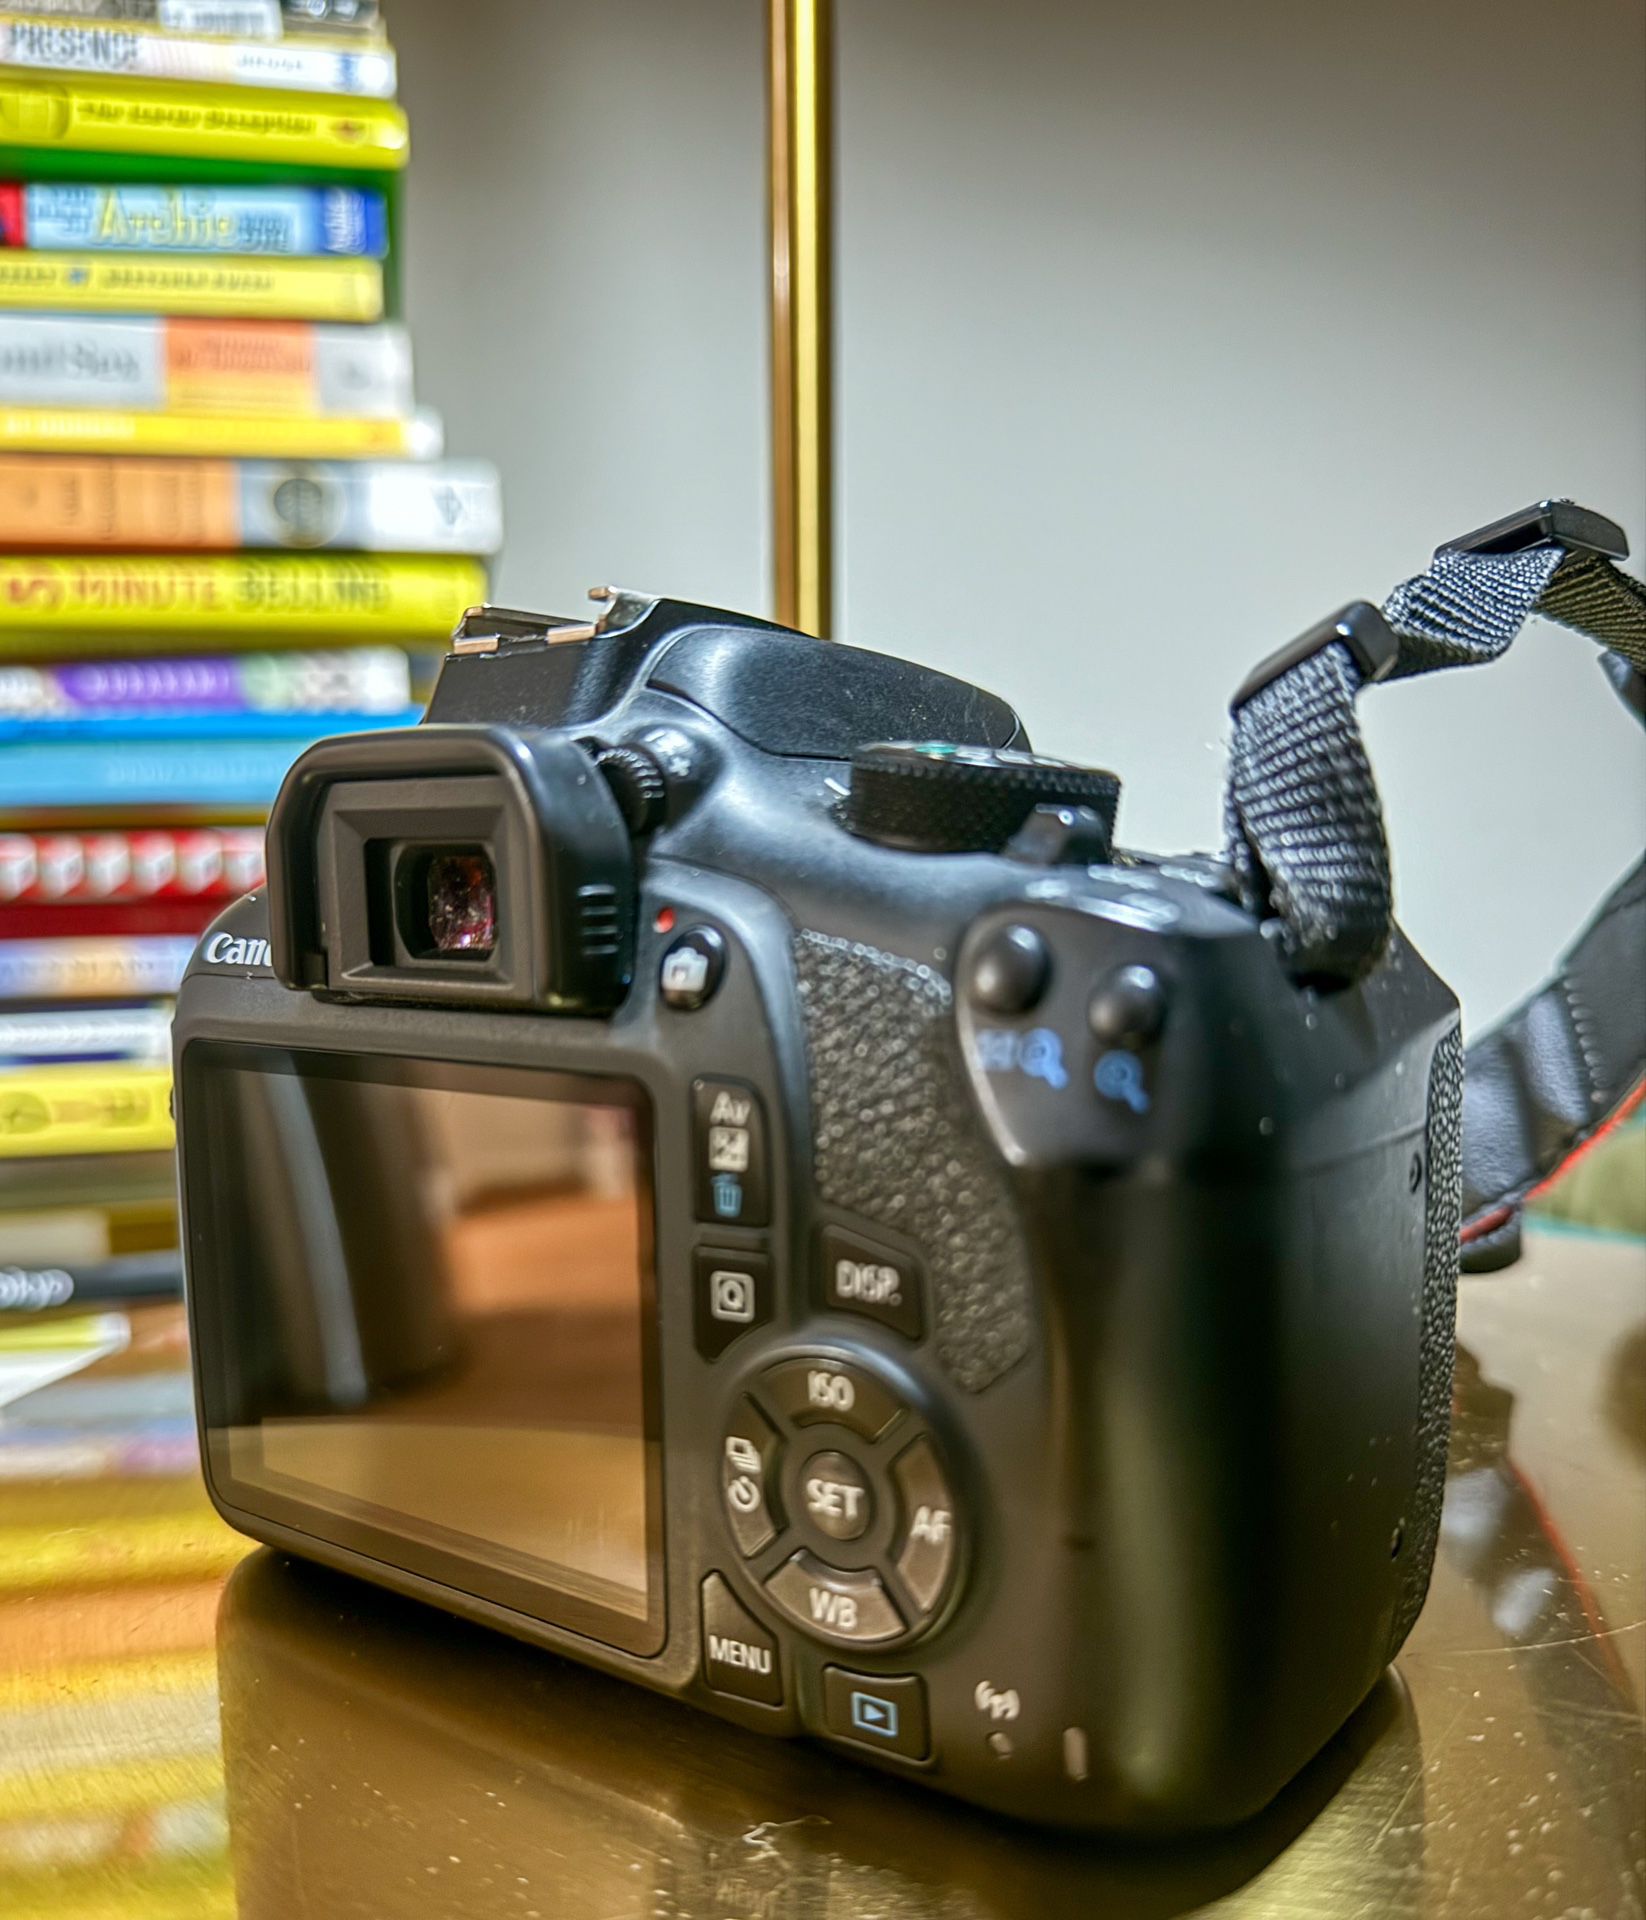 Canon EOS Rebel T6 Digital SLR